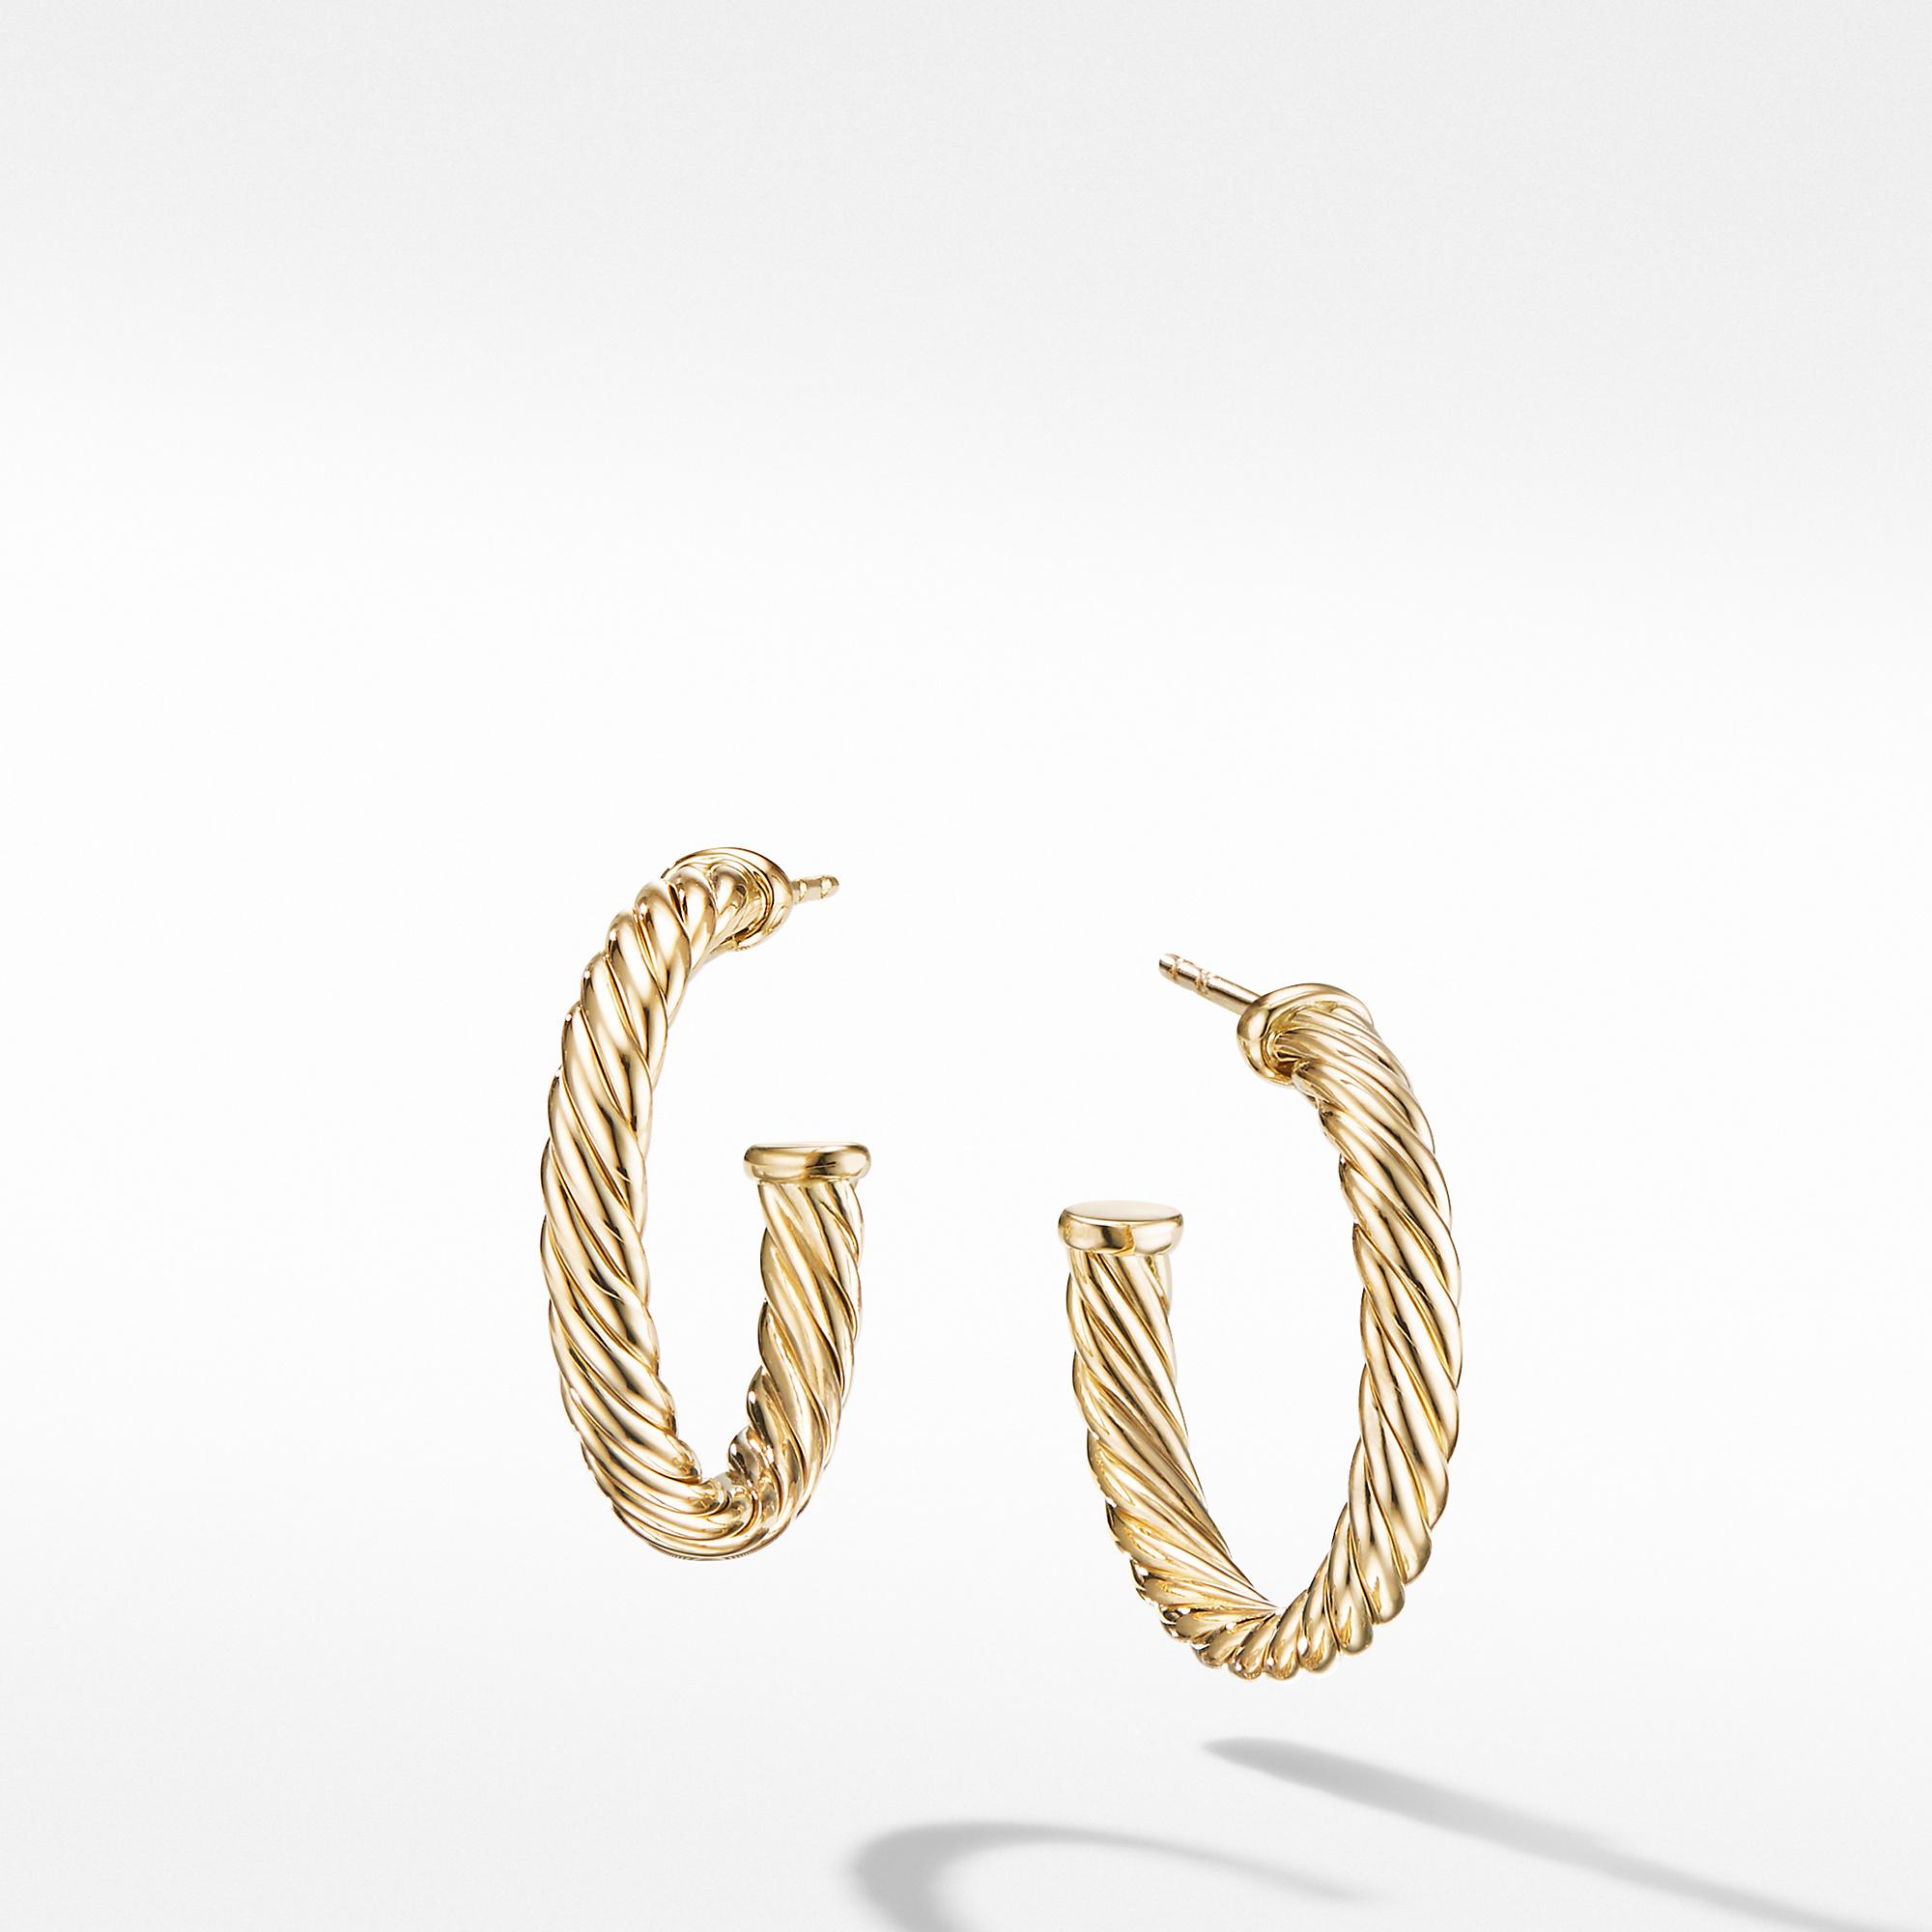 David Yurman Cablespira Hoop Earrings in 18k Yellow Gold, 3/4 inches